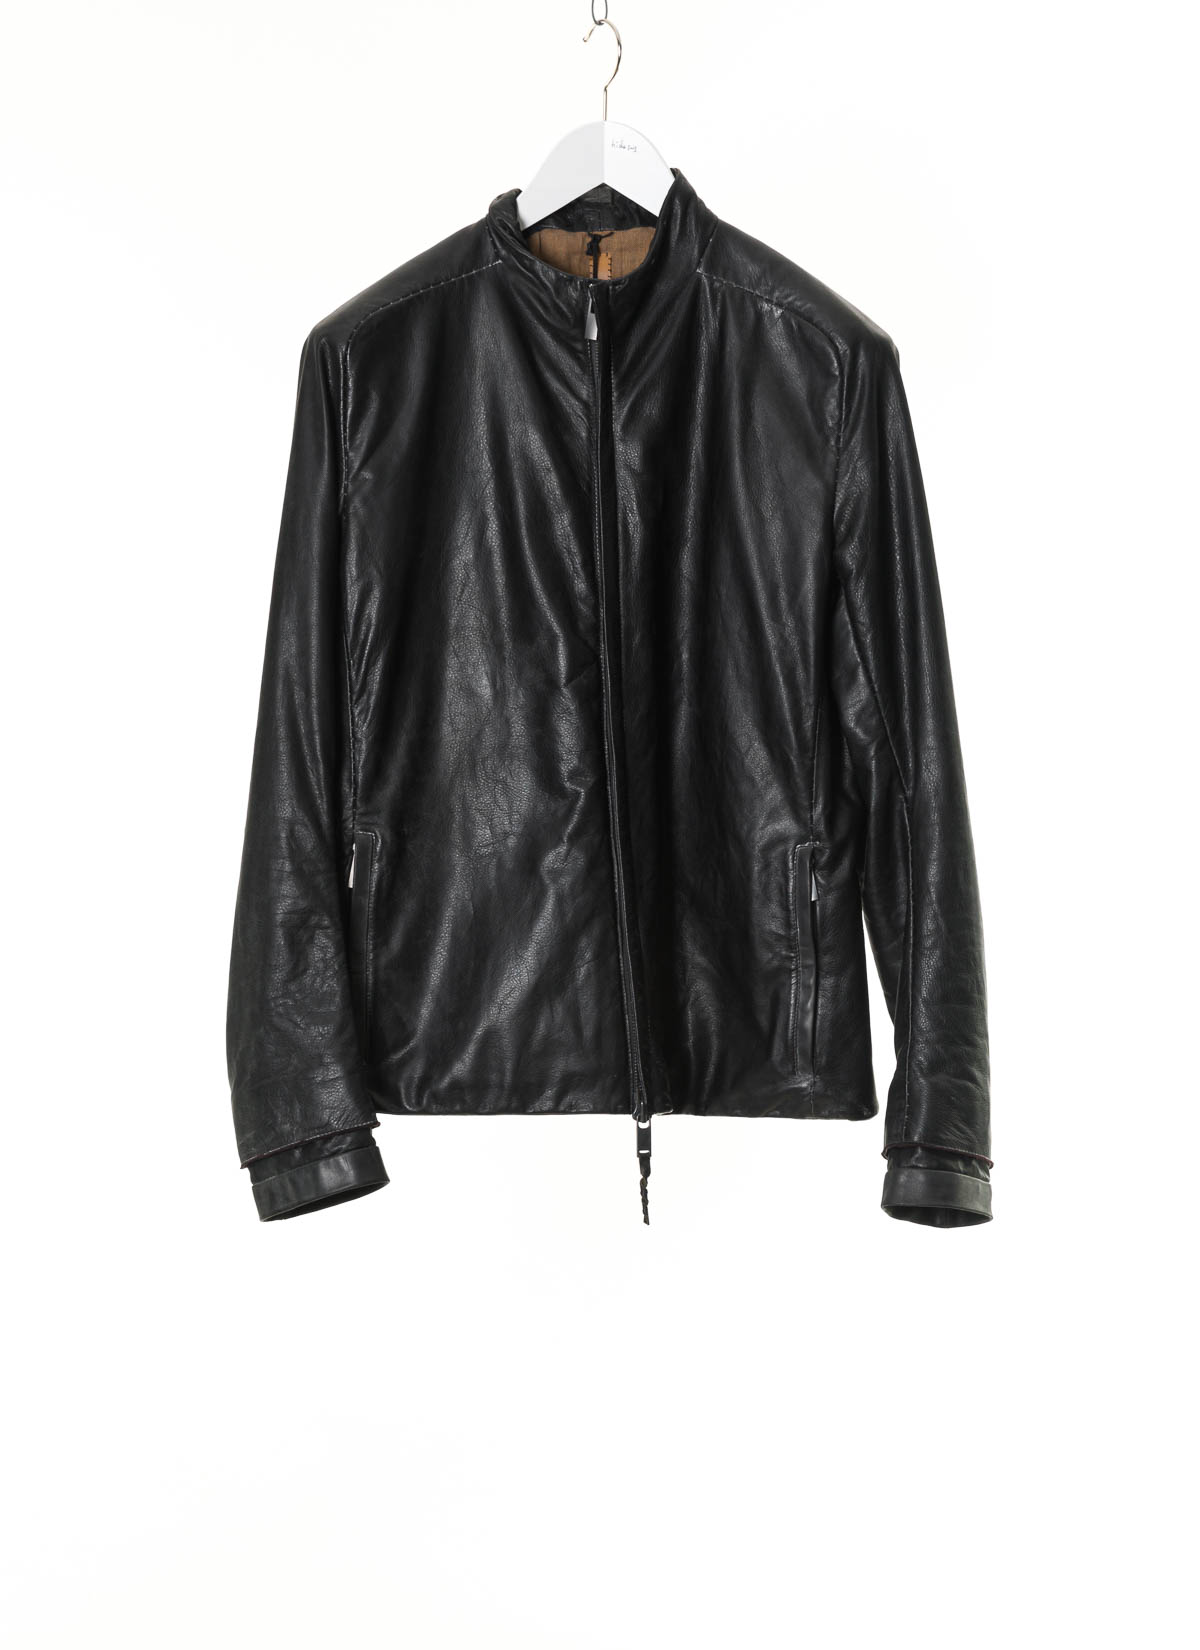 hide-m | LAYER-0 Men Classic H Jacket, black calf leather